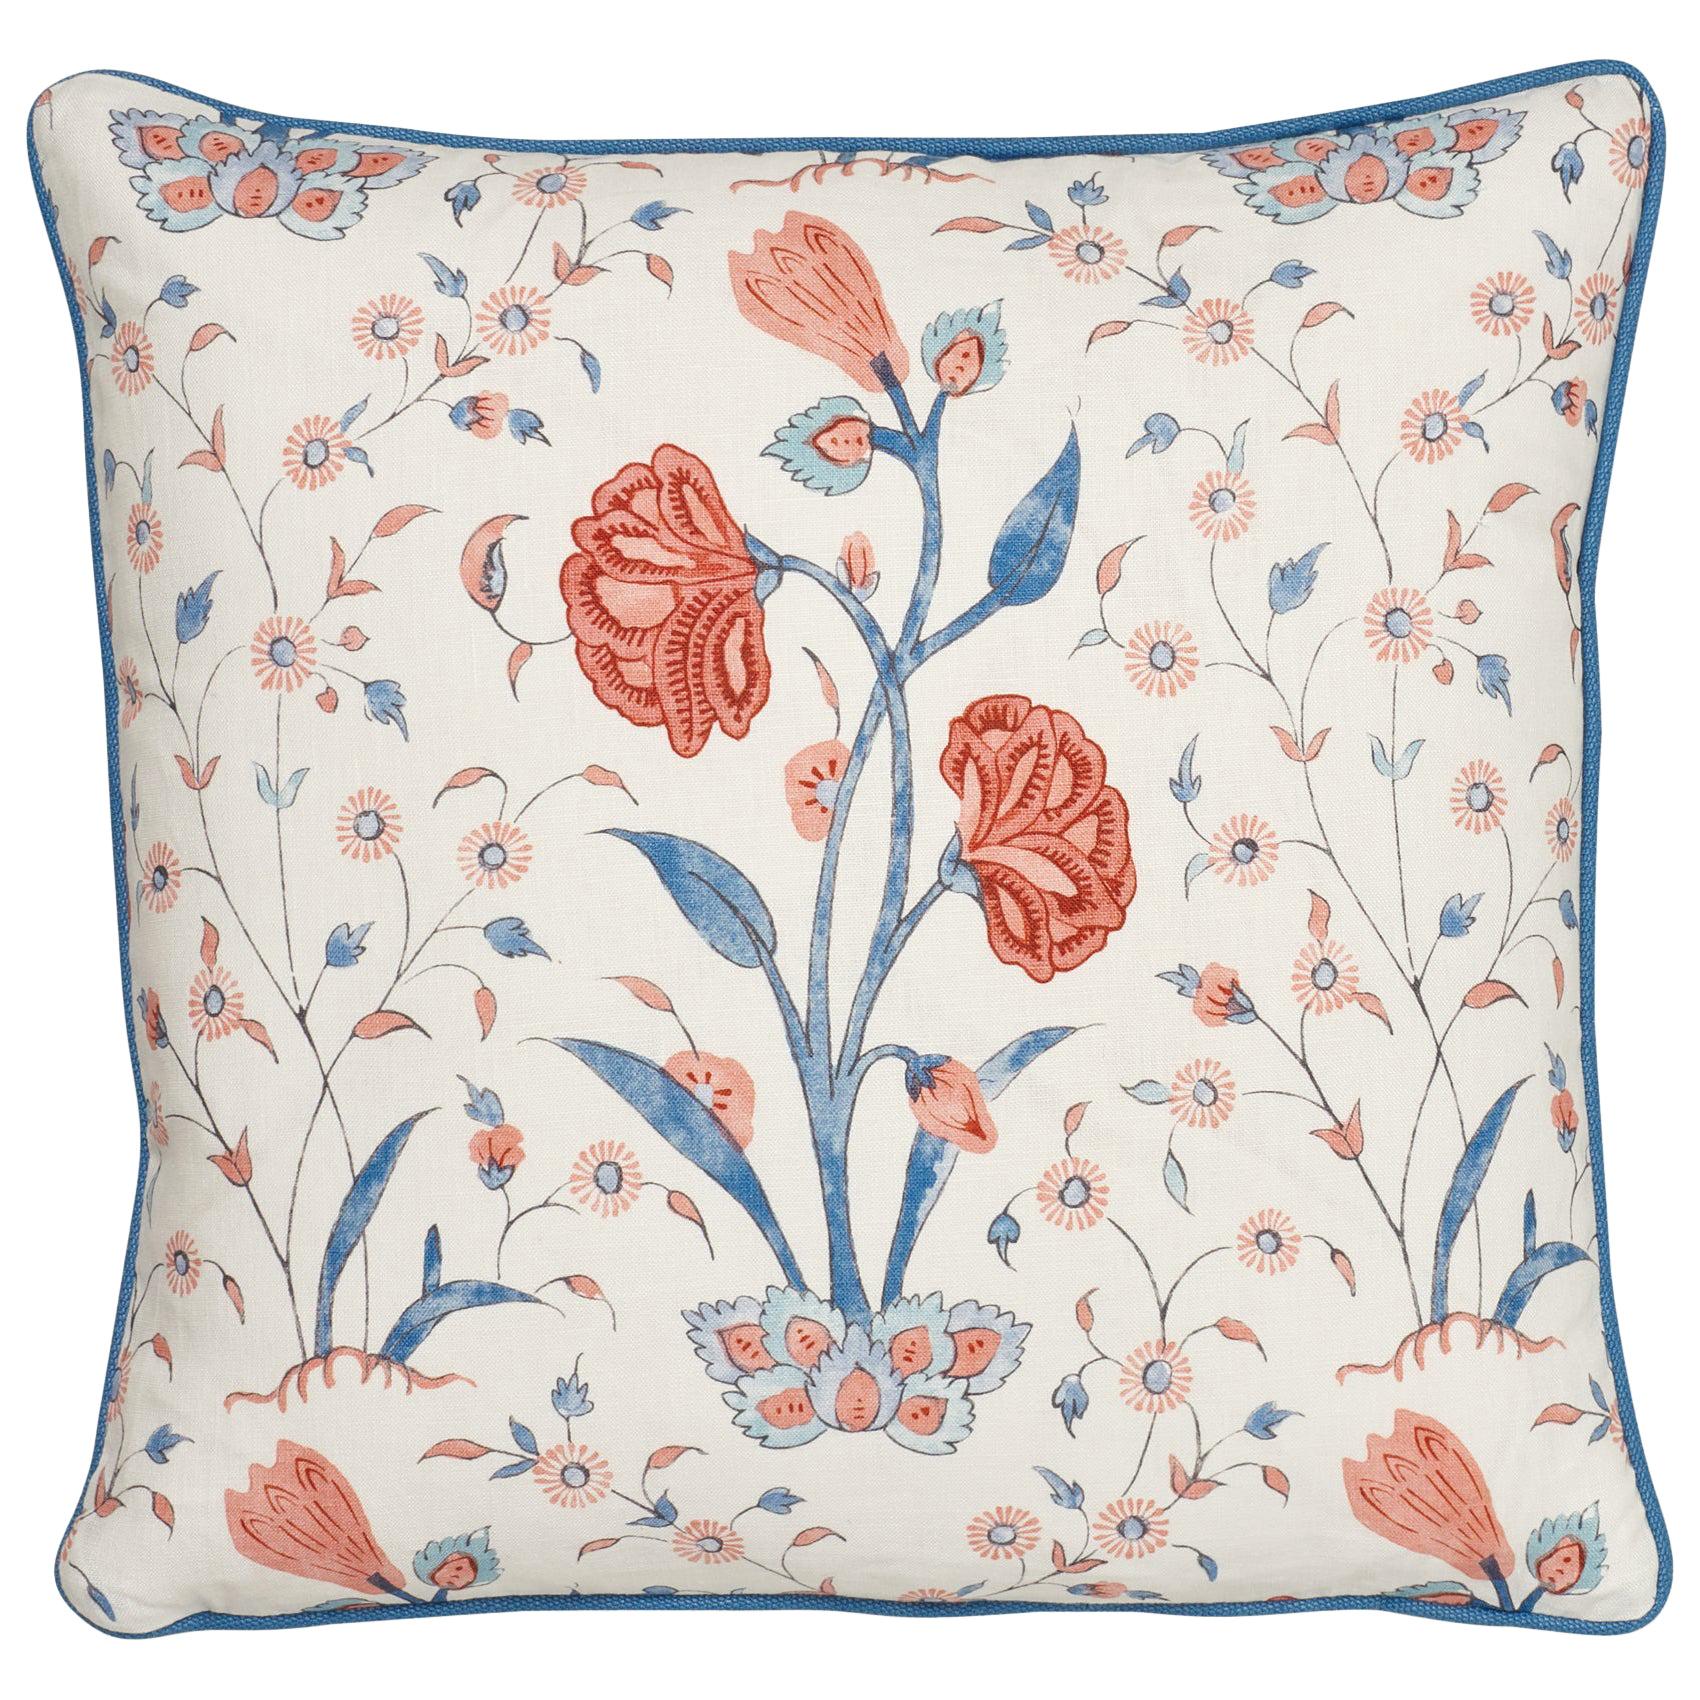 Schumacher Khilana Floral Delft Rose Linen Cotton Two-Sided Pillow